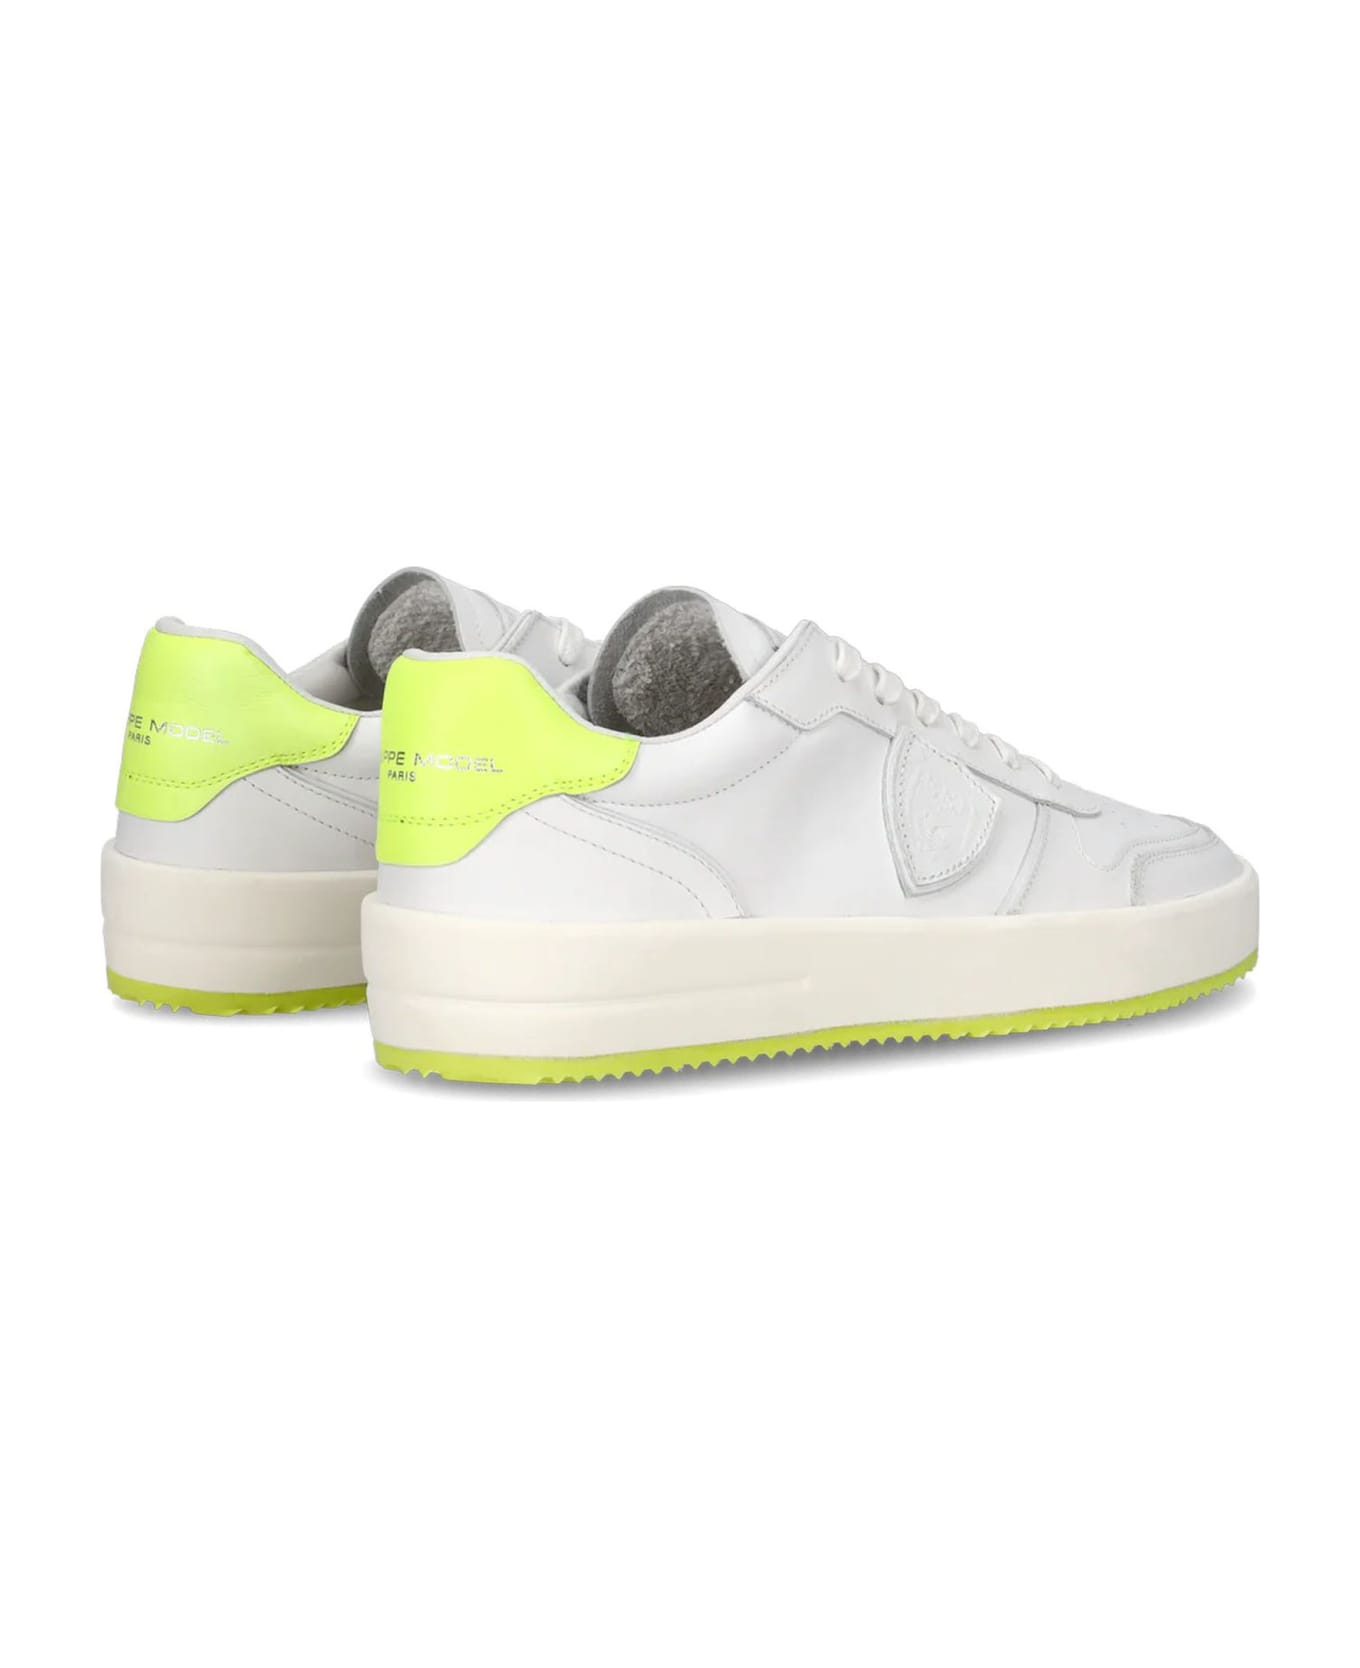 Philippe Model Nice Sneaker White And Neon Yellow - White スニーカー